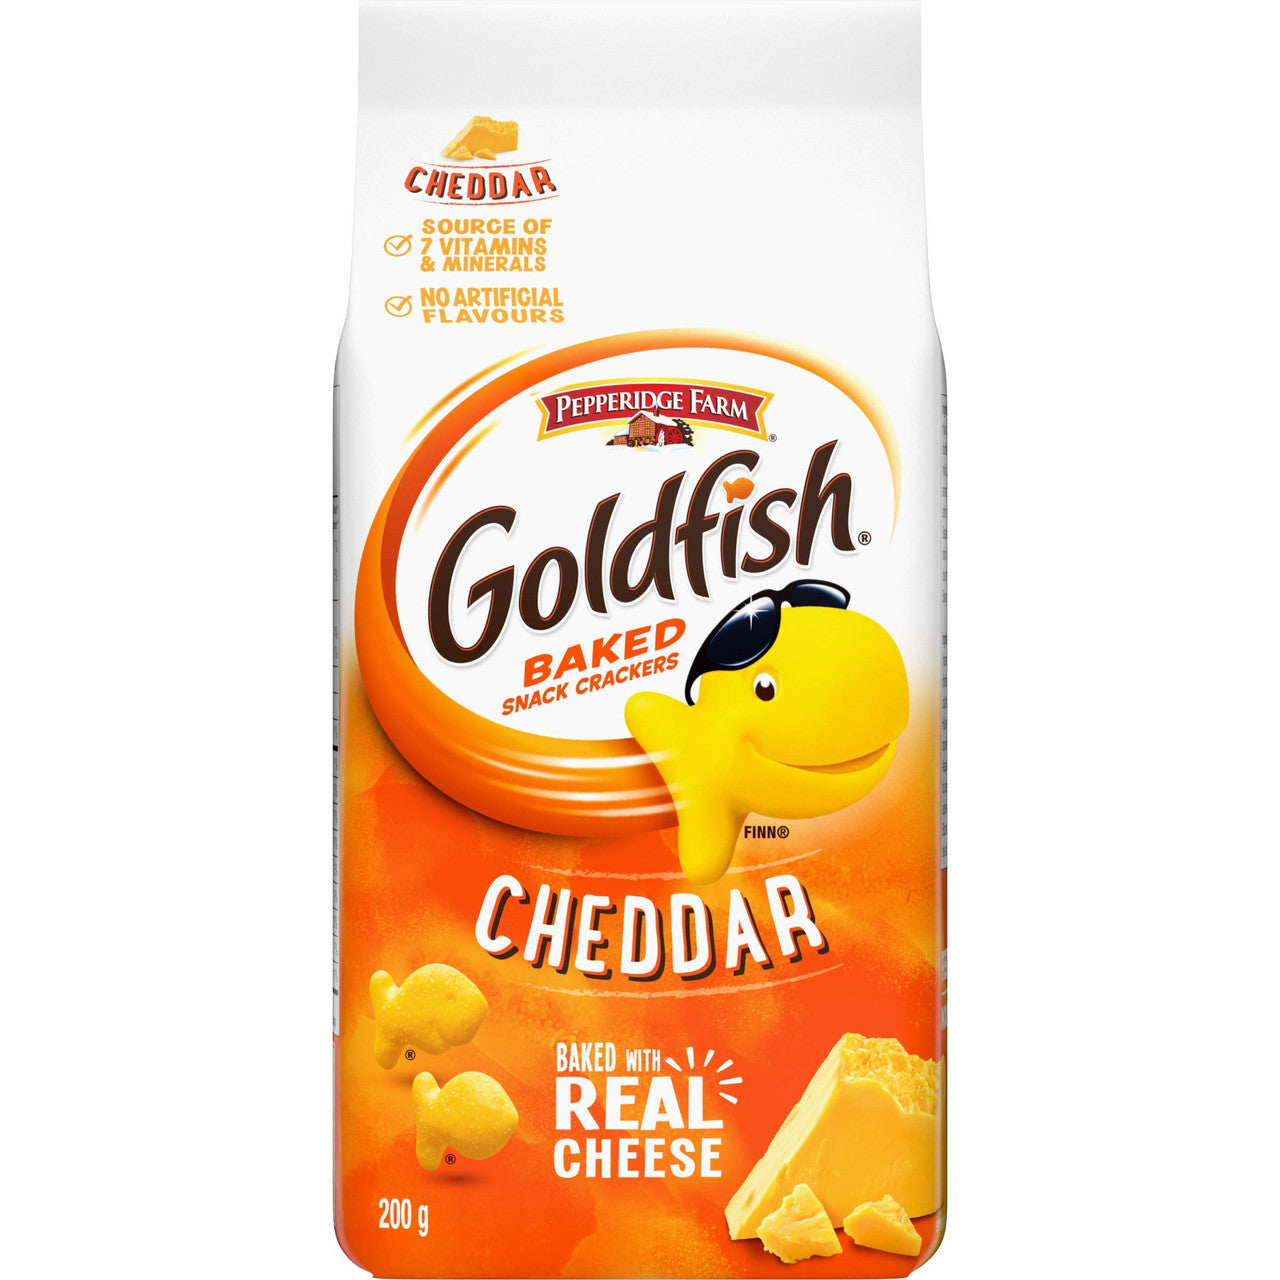 Pepperidge Farm Goldfish Cheddar Crackers, 200g/7oz, {Imported from Canada}